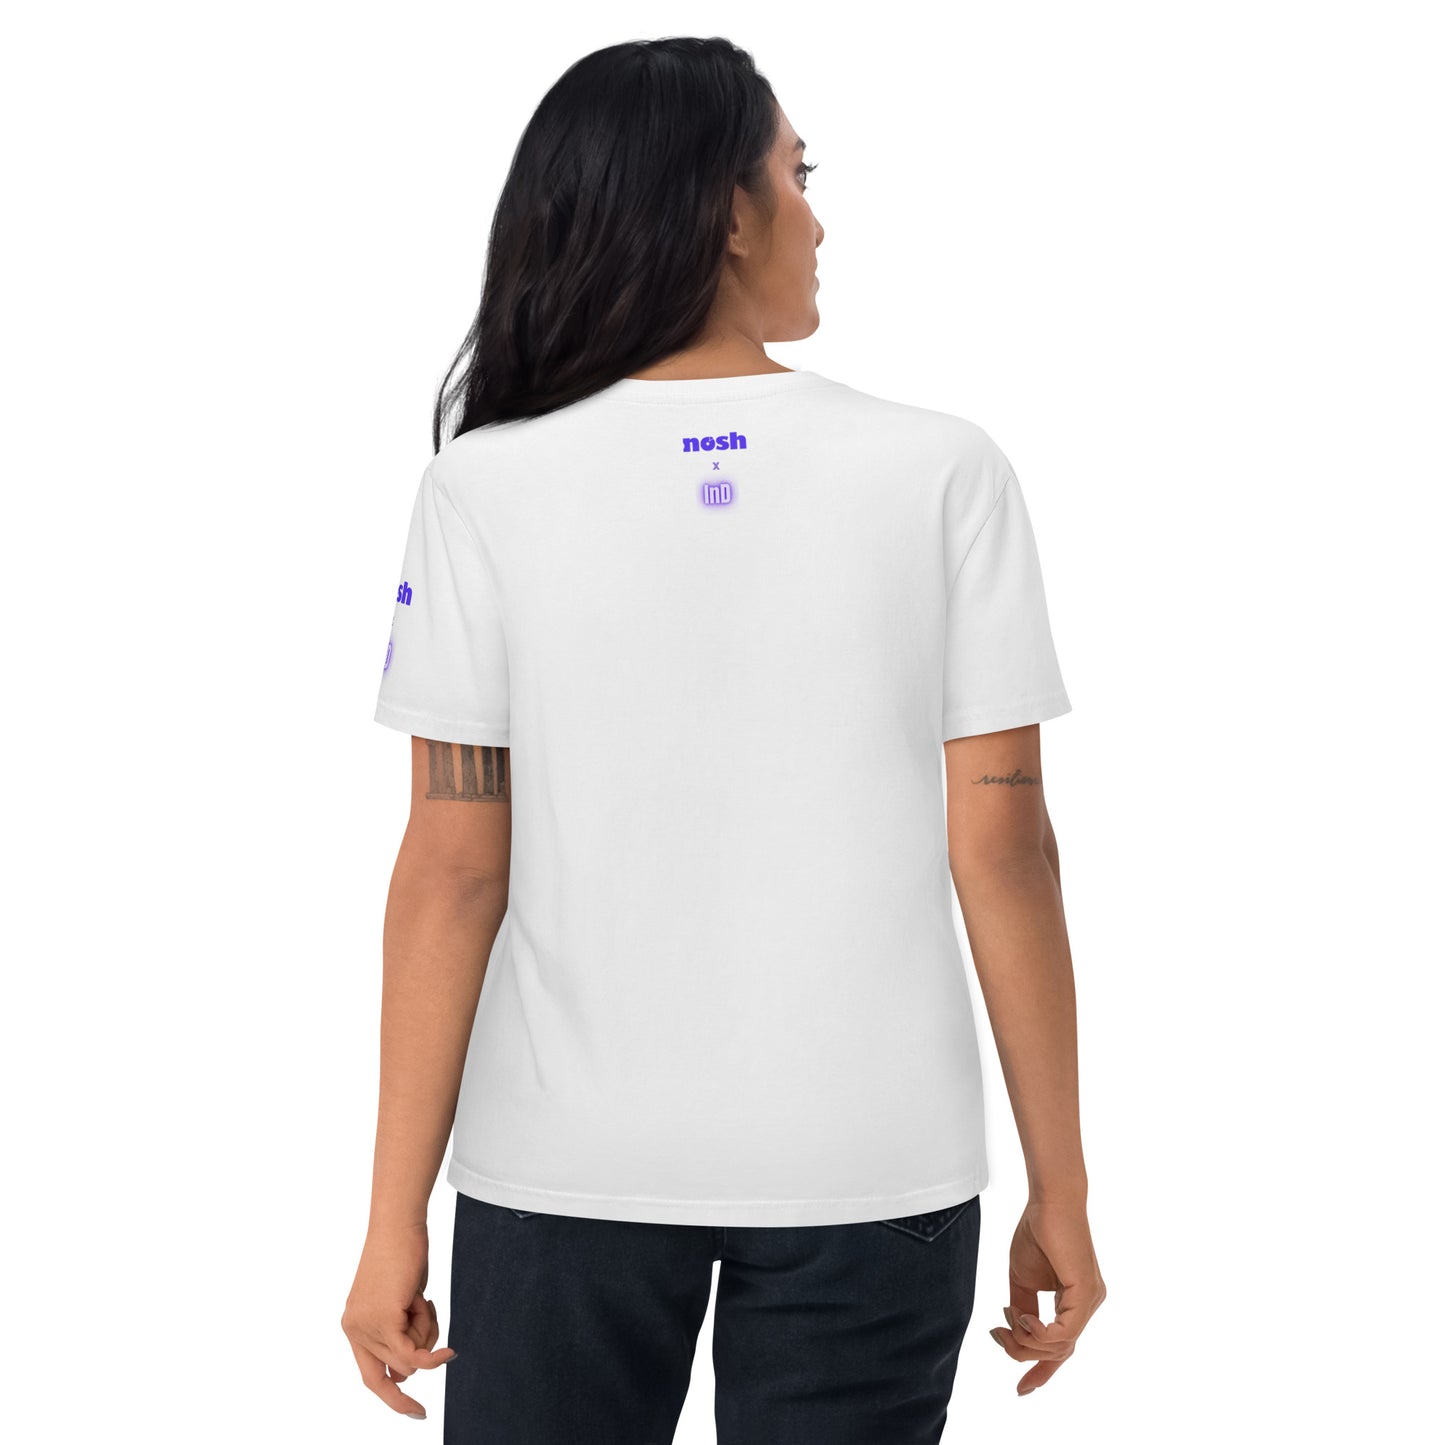 Unisex organic cotton t-shirt - "I will try again tomorrow"